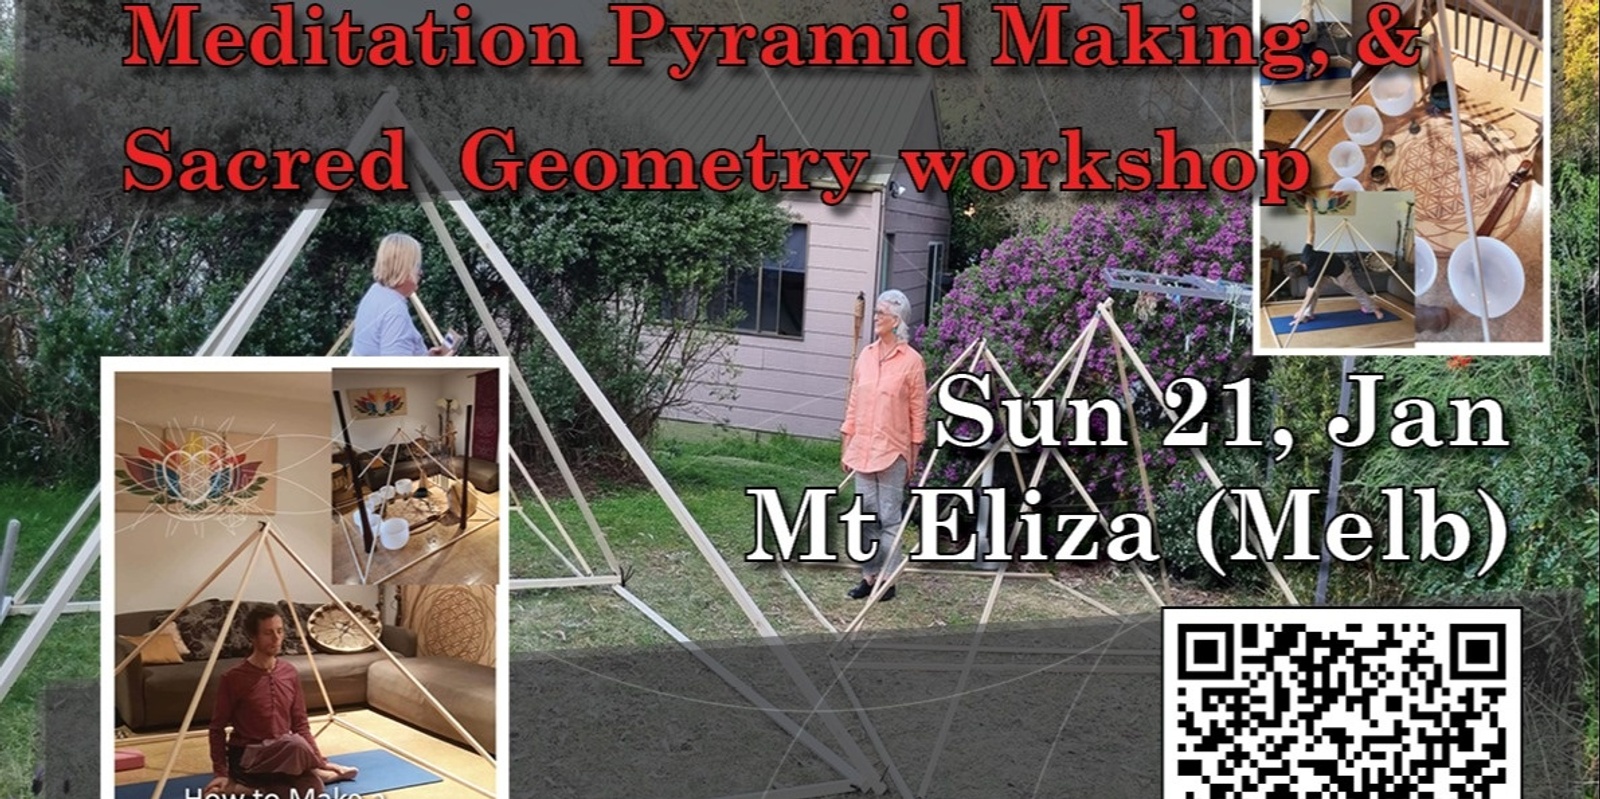 Banner image for Pyramid Crafting, & sacred Geometry Workshop_Mount Eliza _1hr Melb